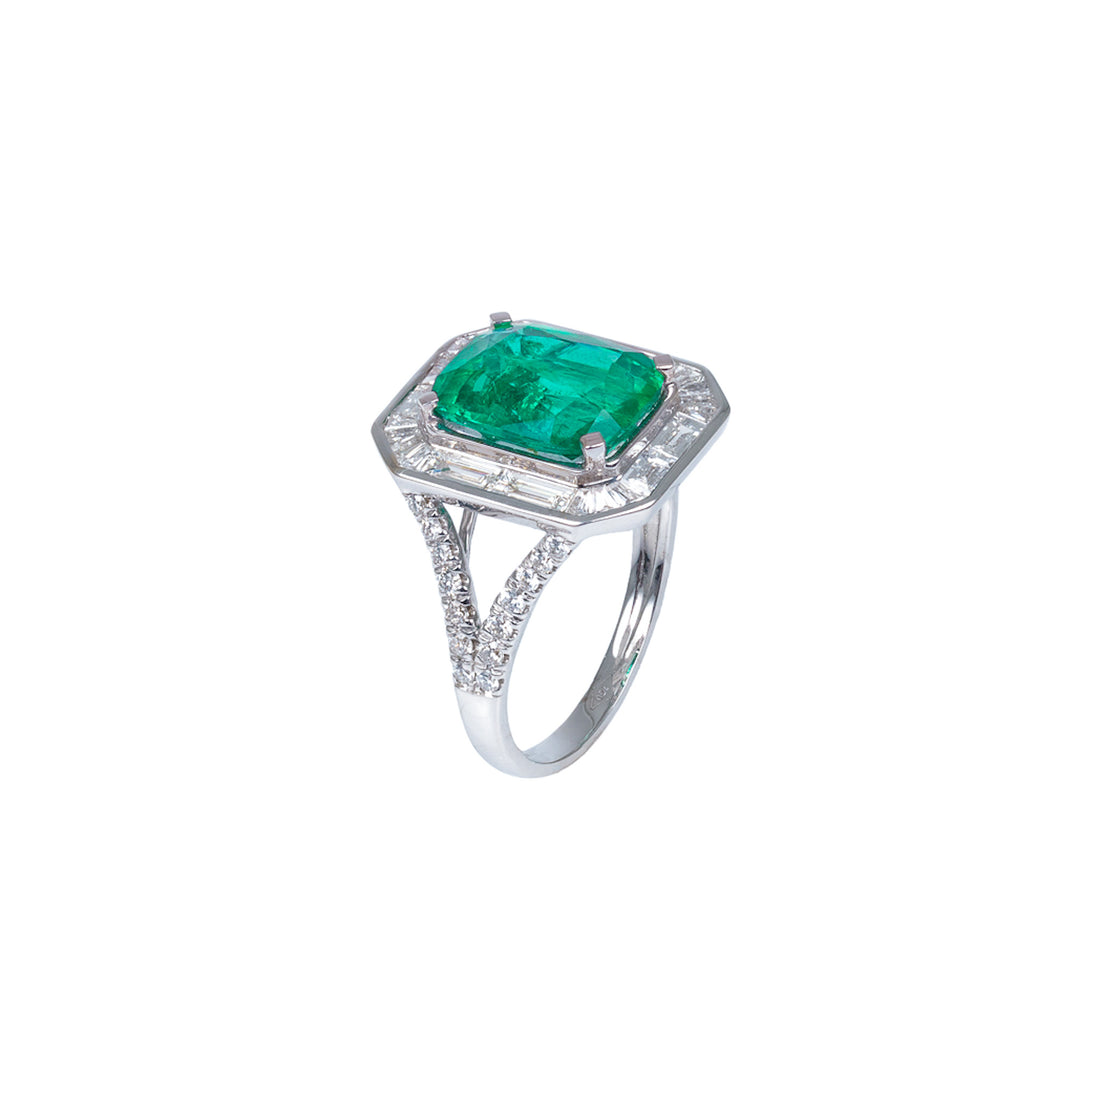 Maison de Joie 18kt White Gold Diamond & Emerald Ring